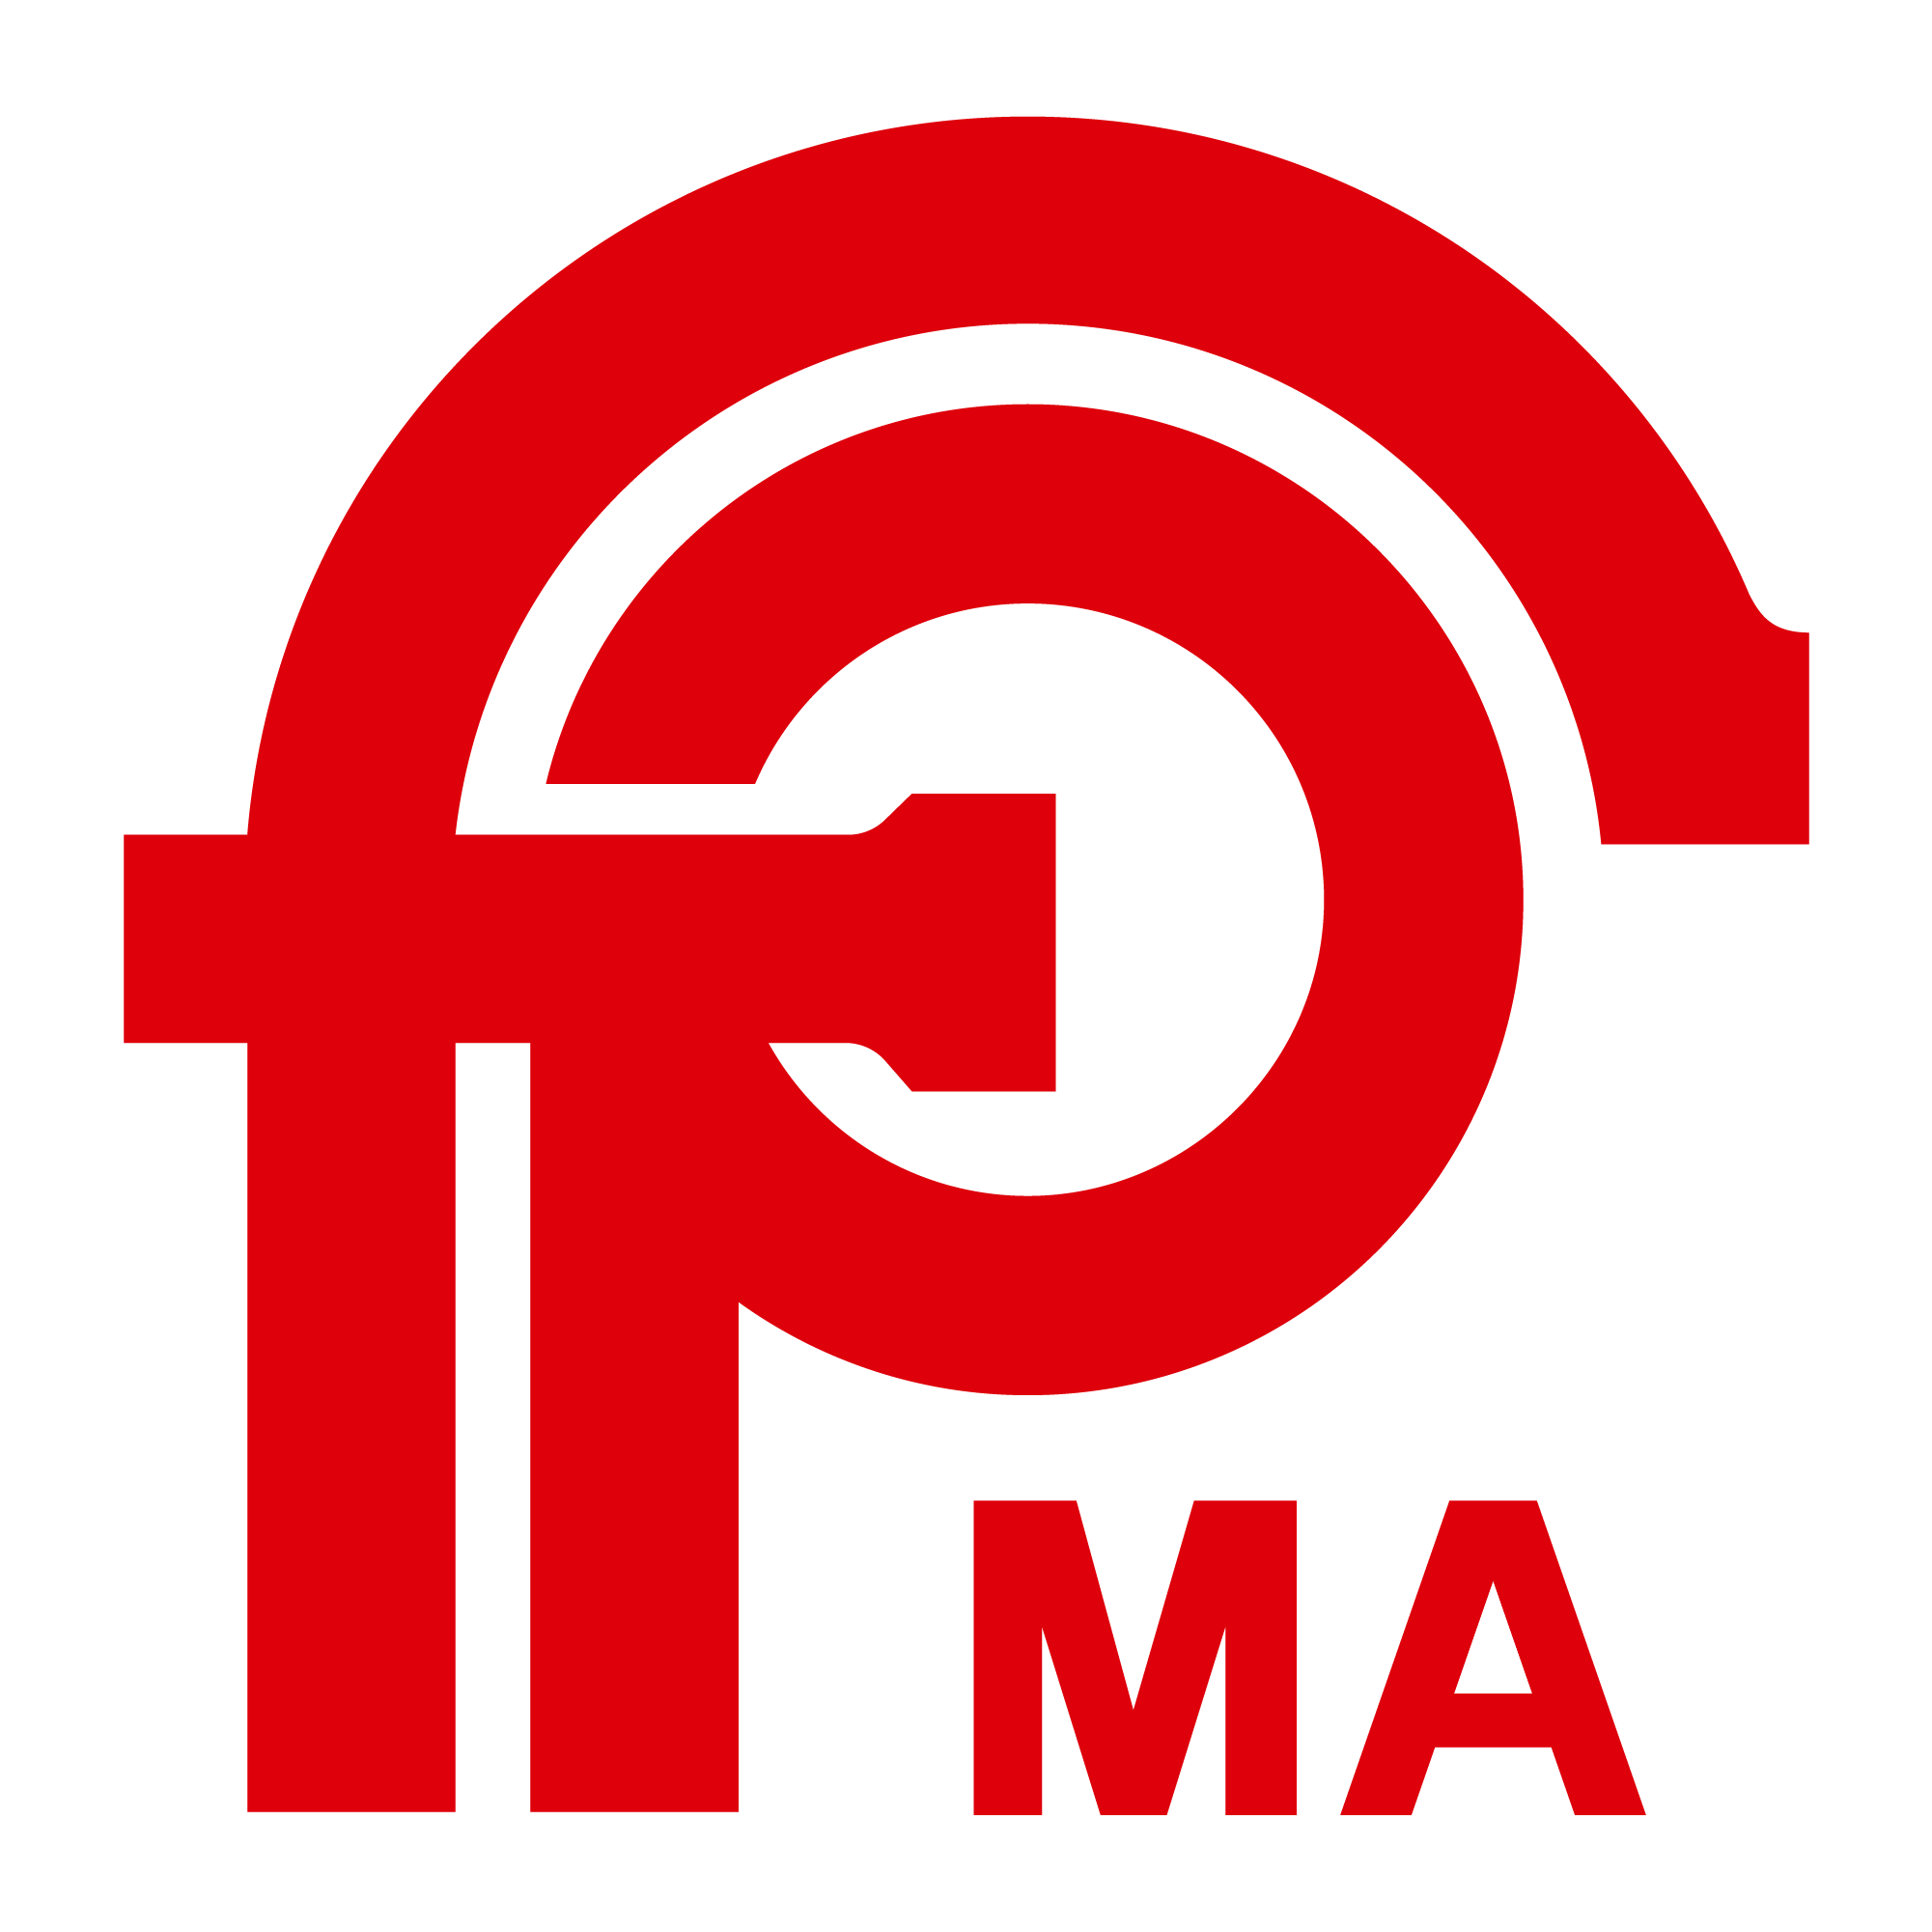 FPMA Logo